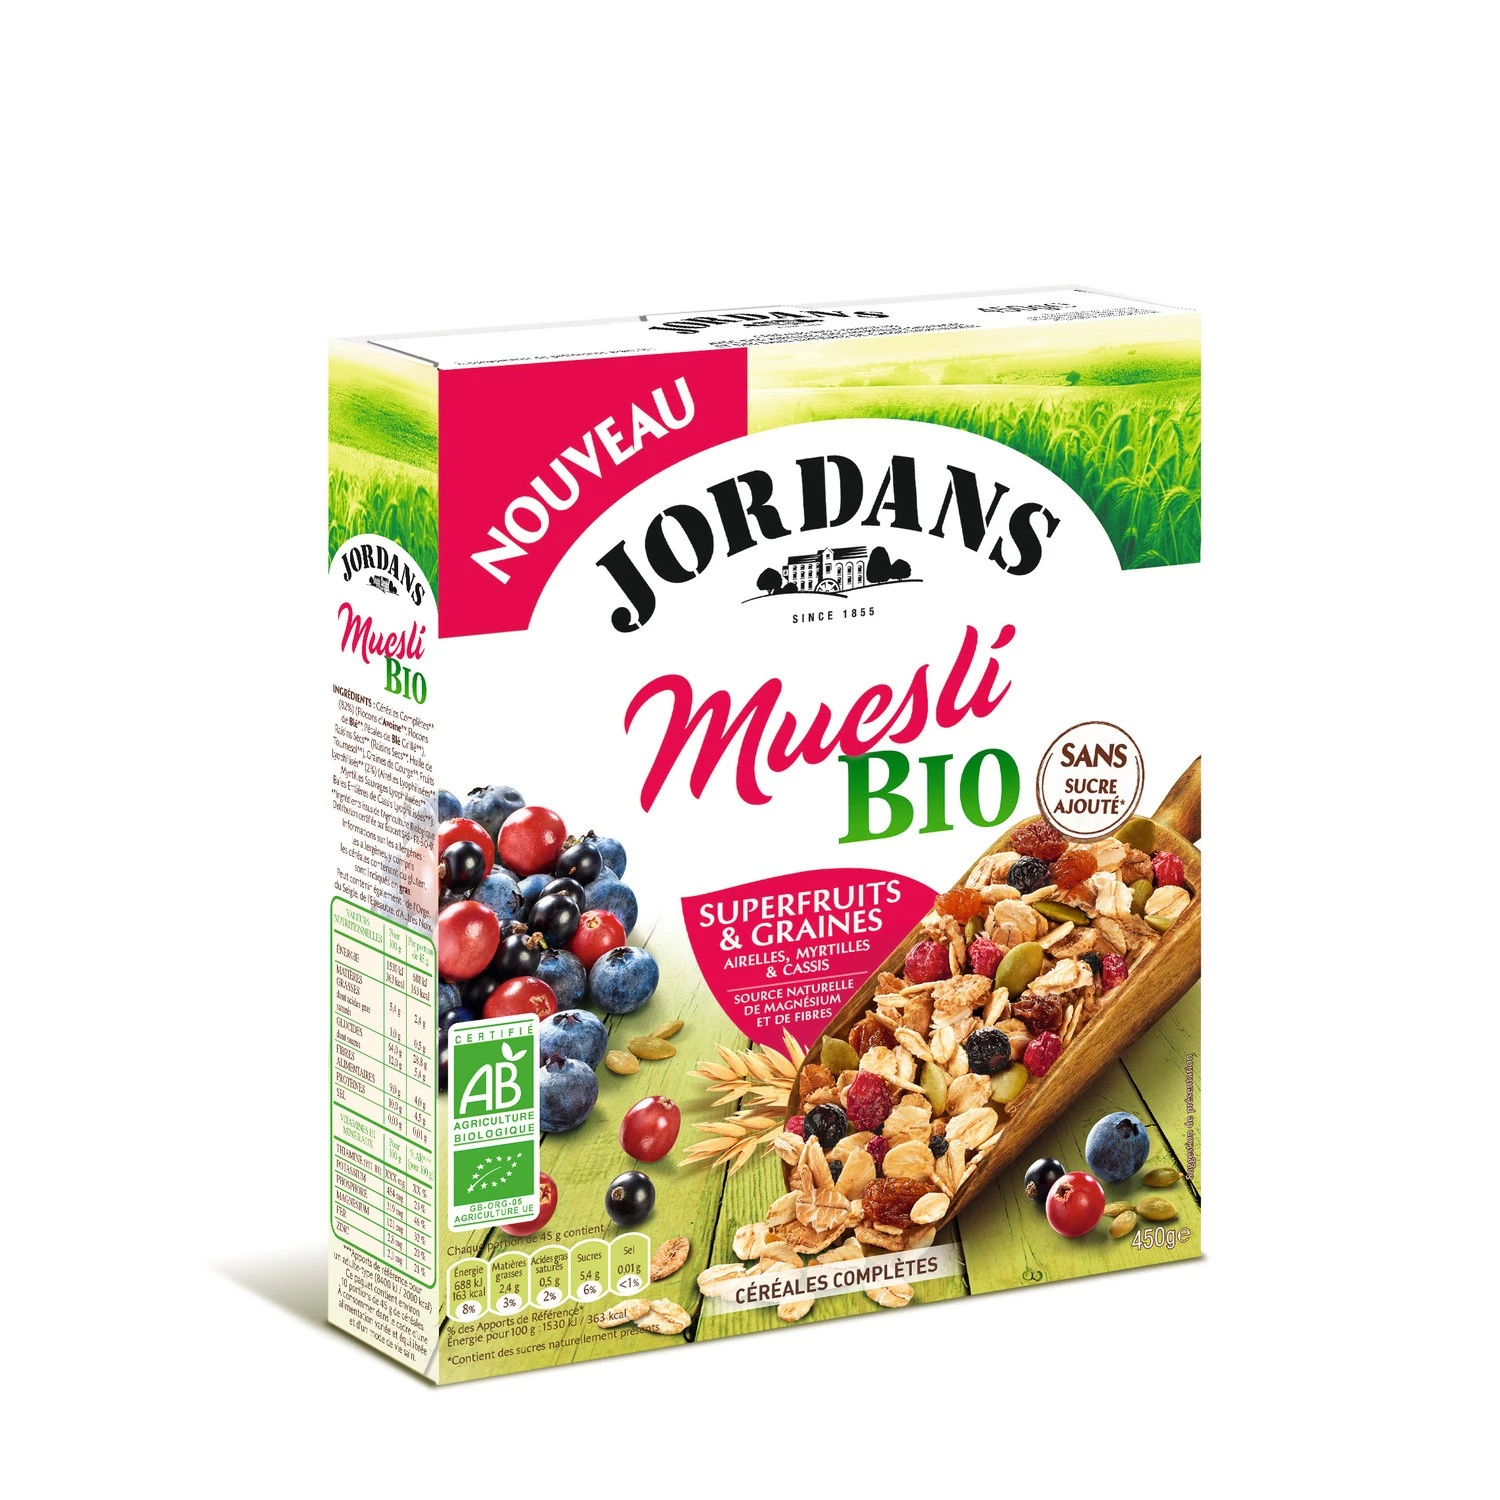 Muesli Bio superfruits & graines 450g - JORDANS